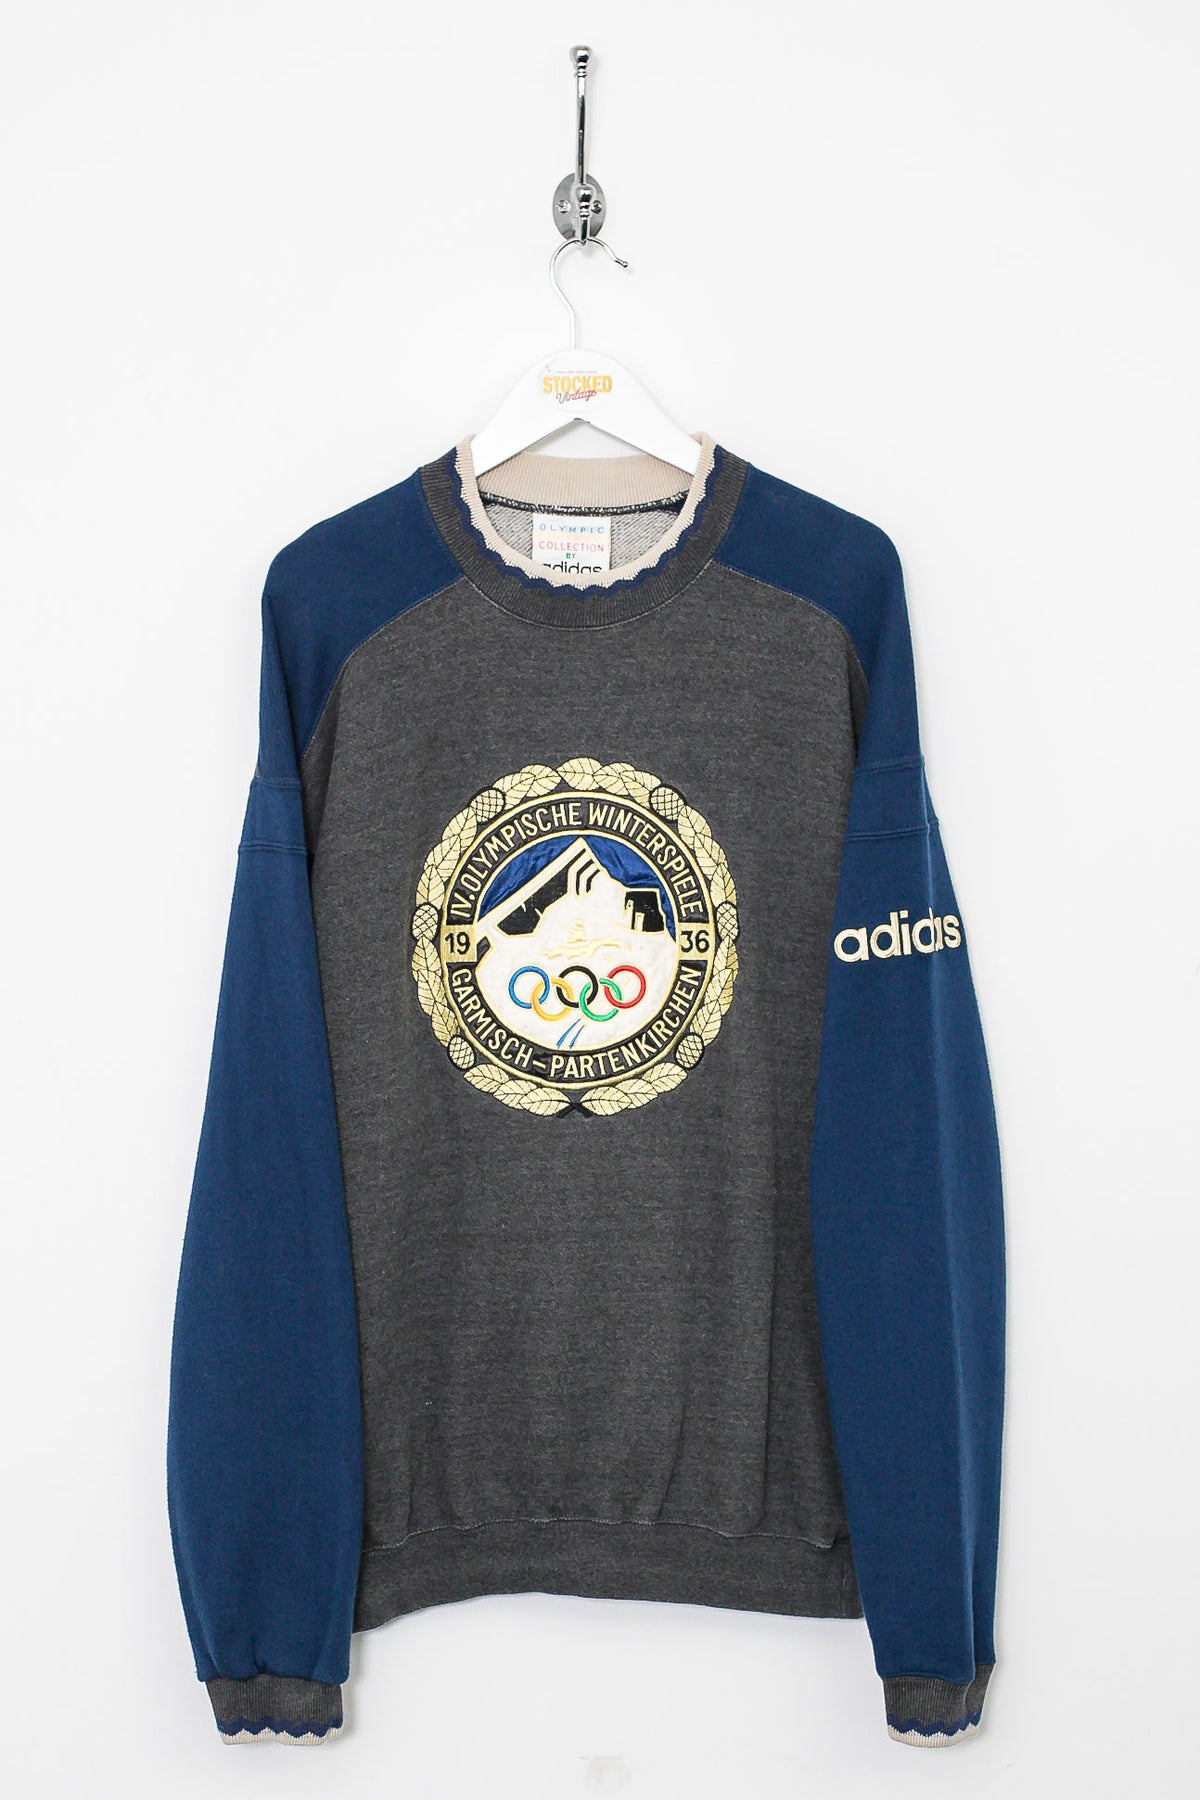 Rare 90s Adidas Germany Olympics Sweatshirt (M)